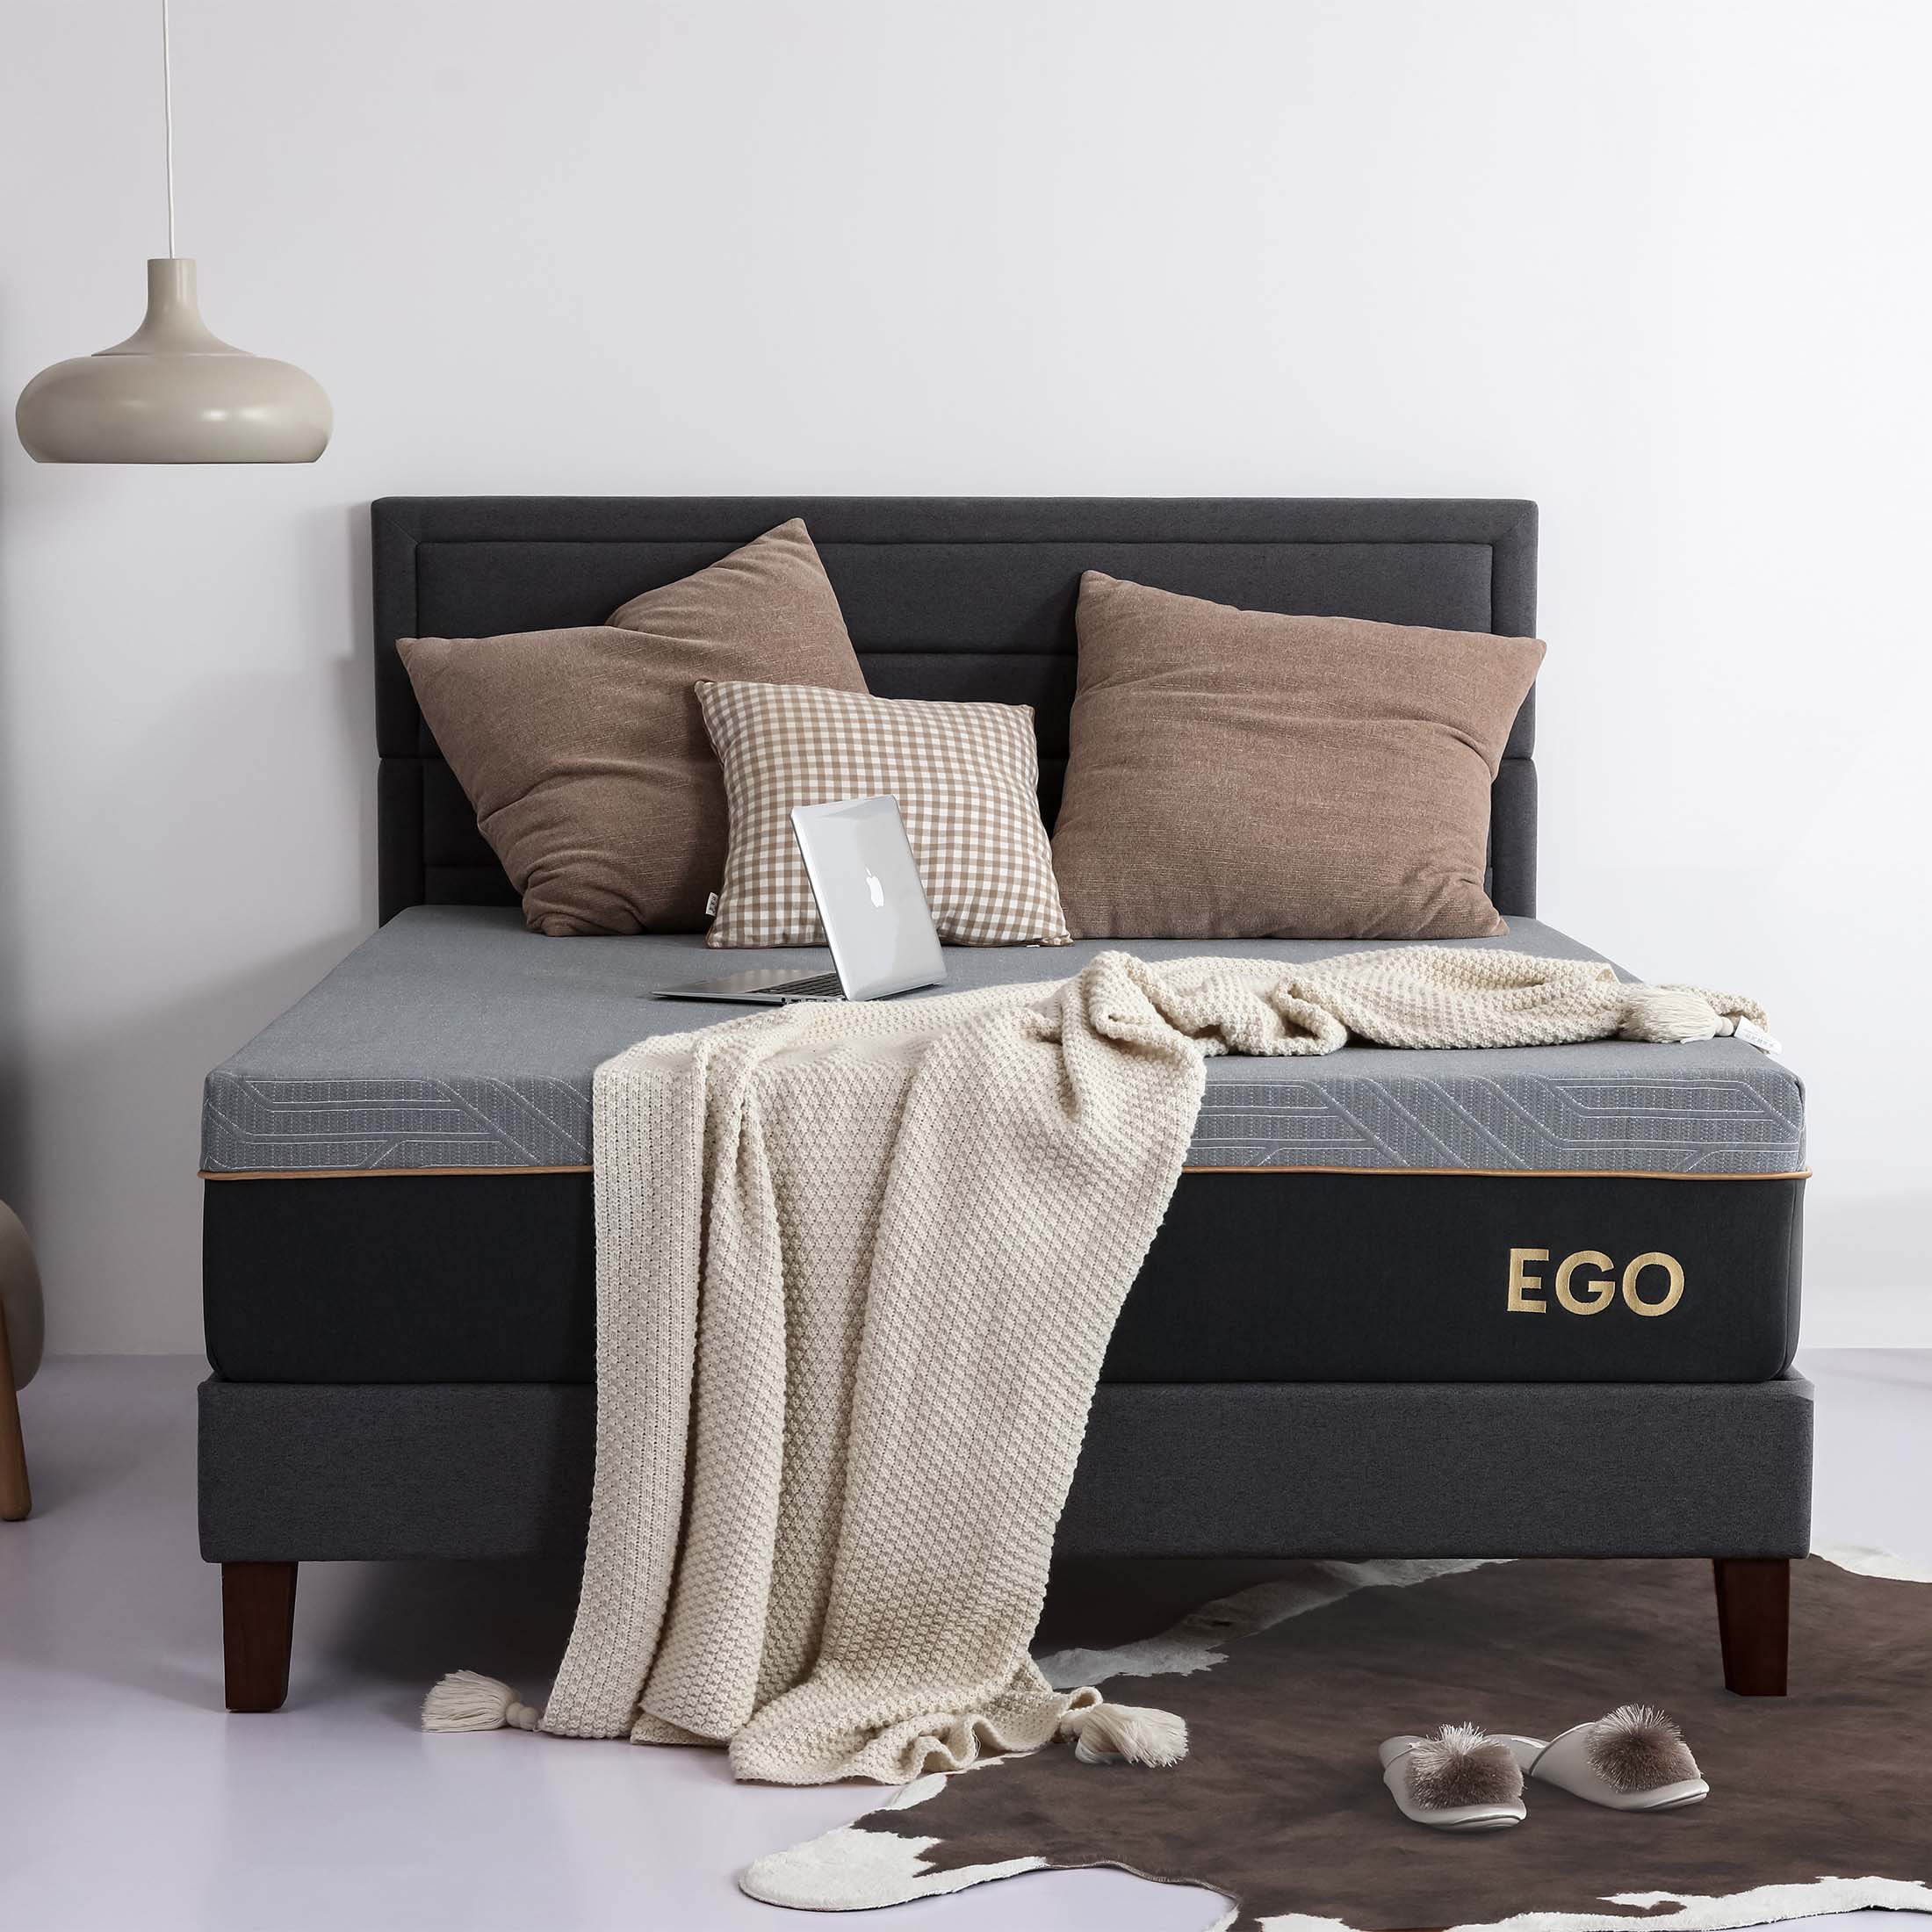 MLILY Ego 4.5 inch Sofa Bed Mattress, Memory Foam Mattress for Sleeper,  Full Size